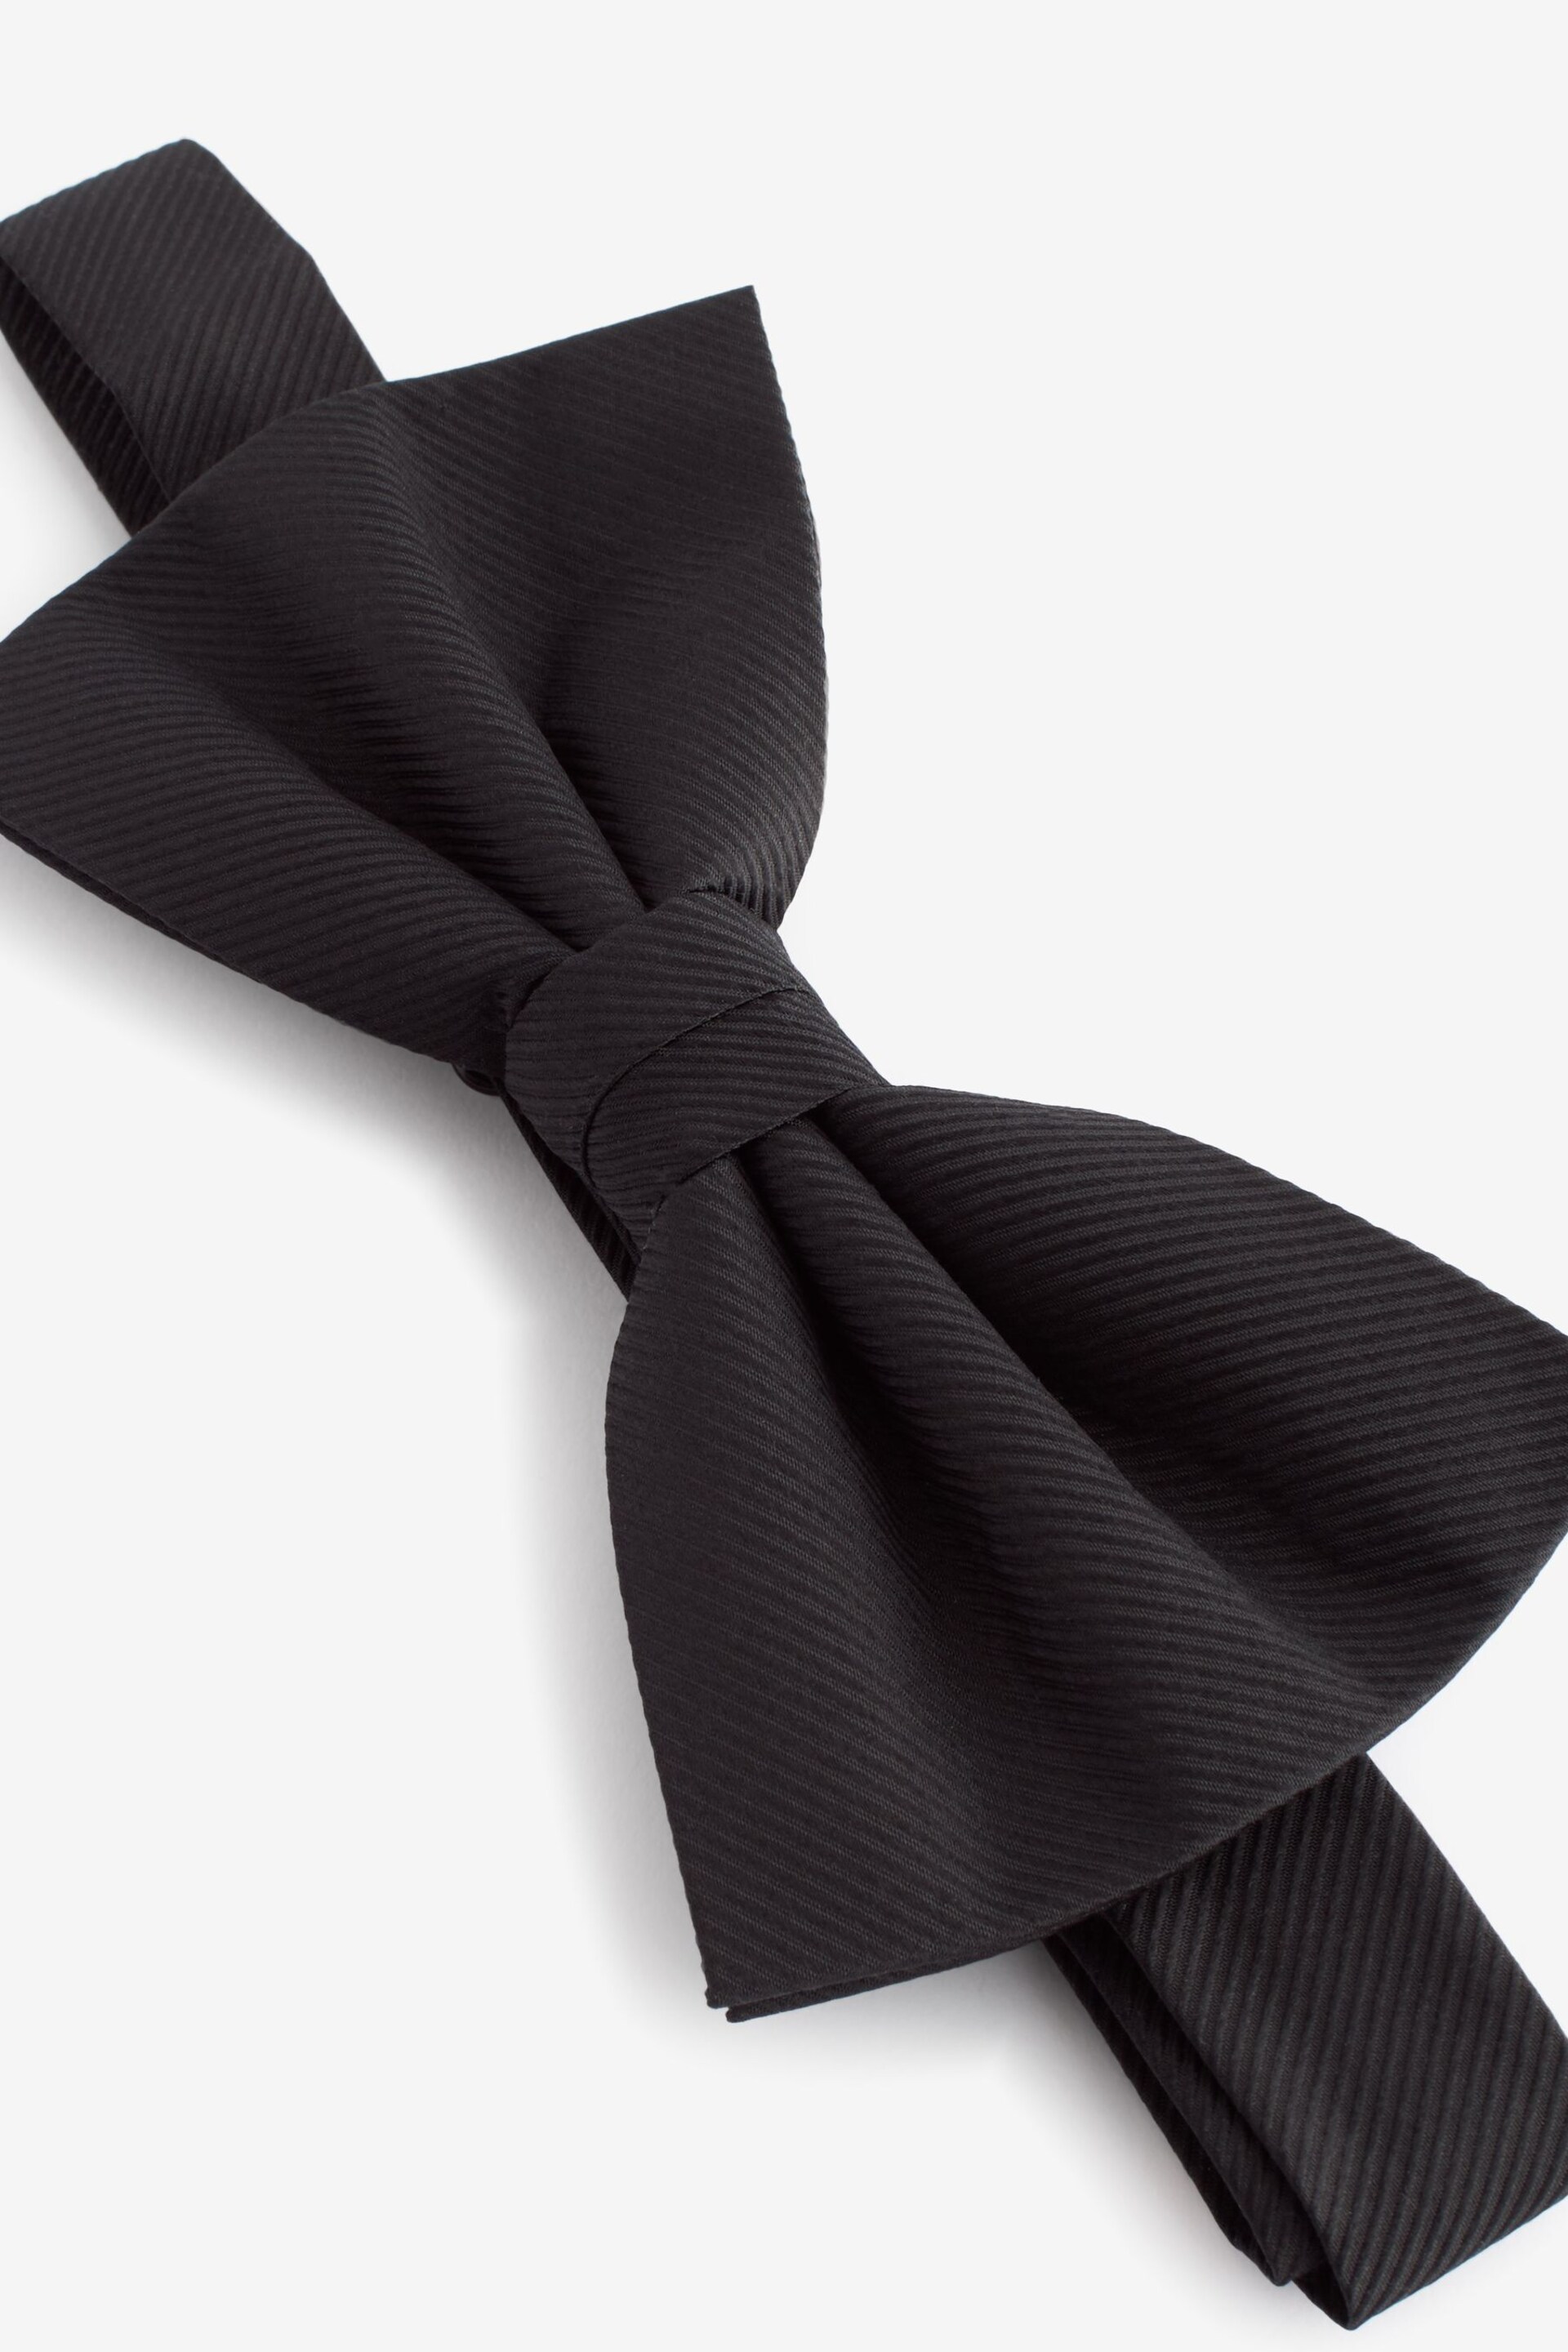 Black Twill Silk Bow Tie - Image 3 of 3